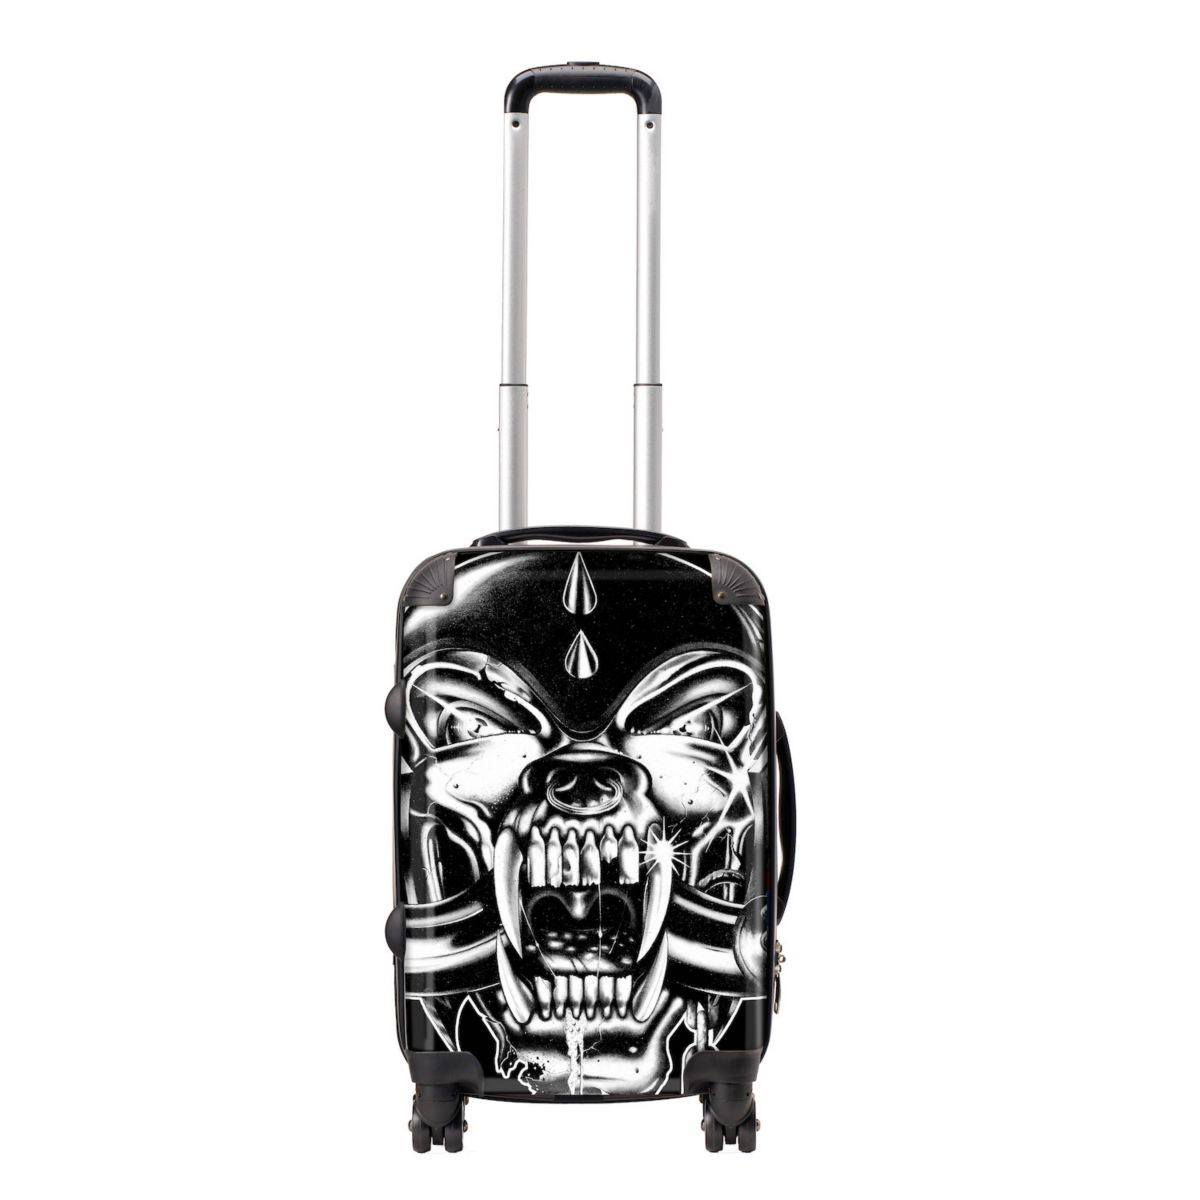 Rocksax Motorhead  - Large Suitcase Luggage - War Pig Zoom Rocksax